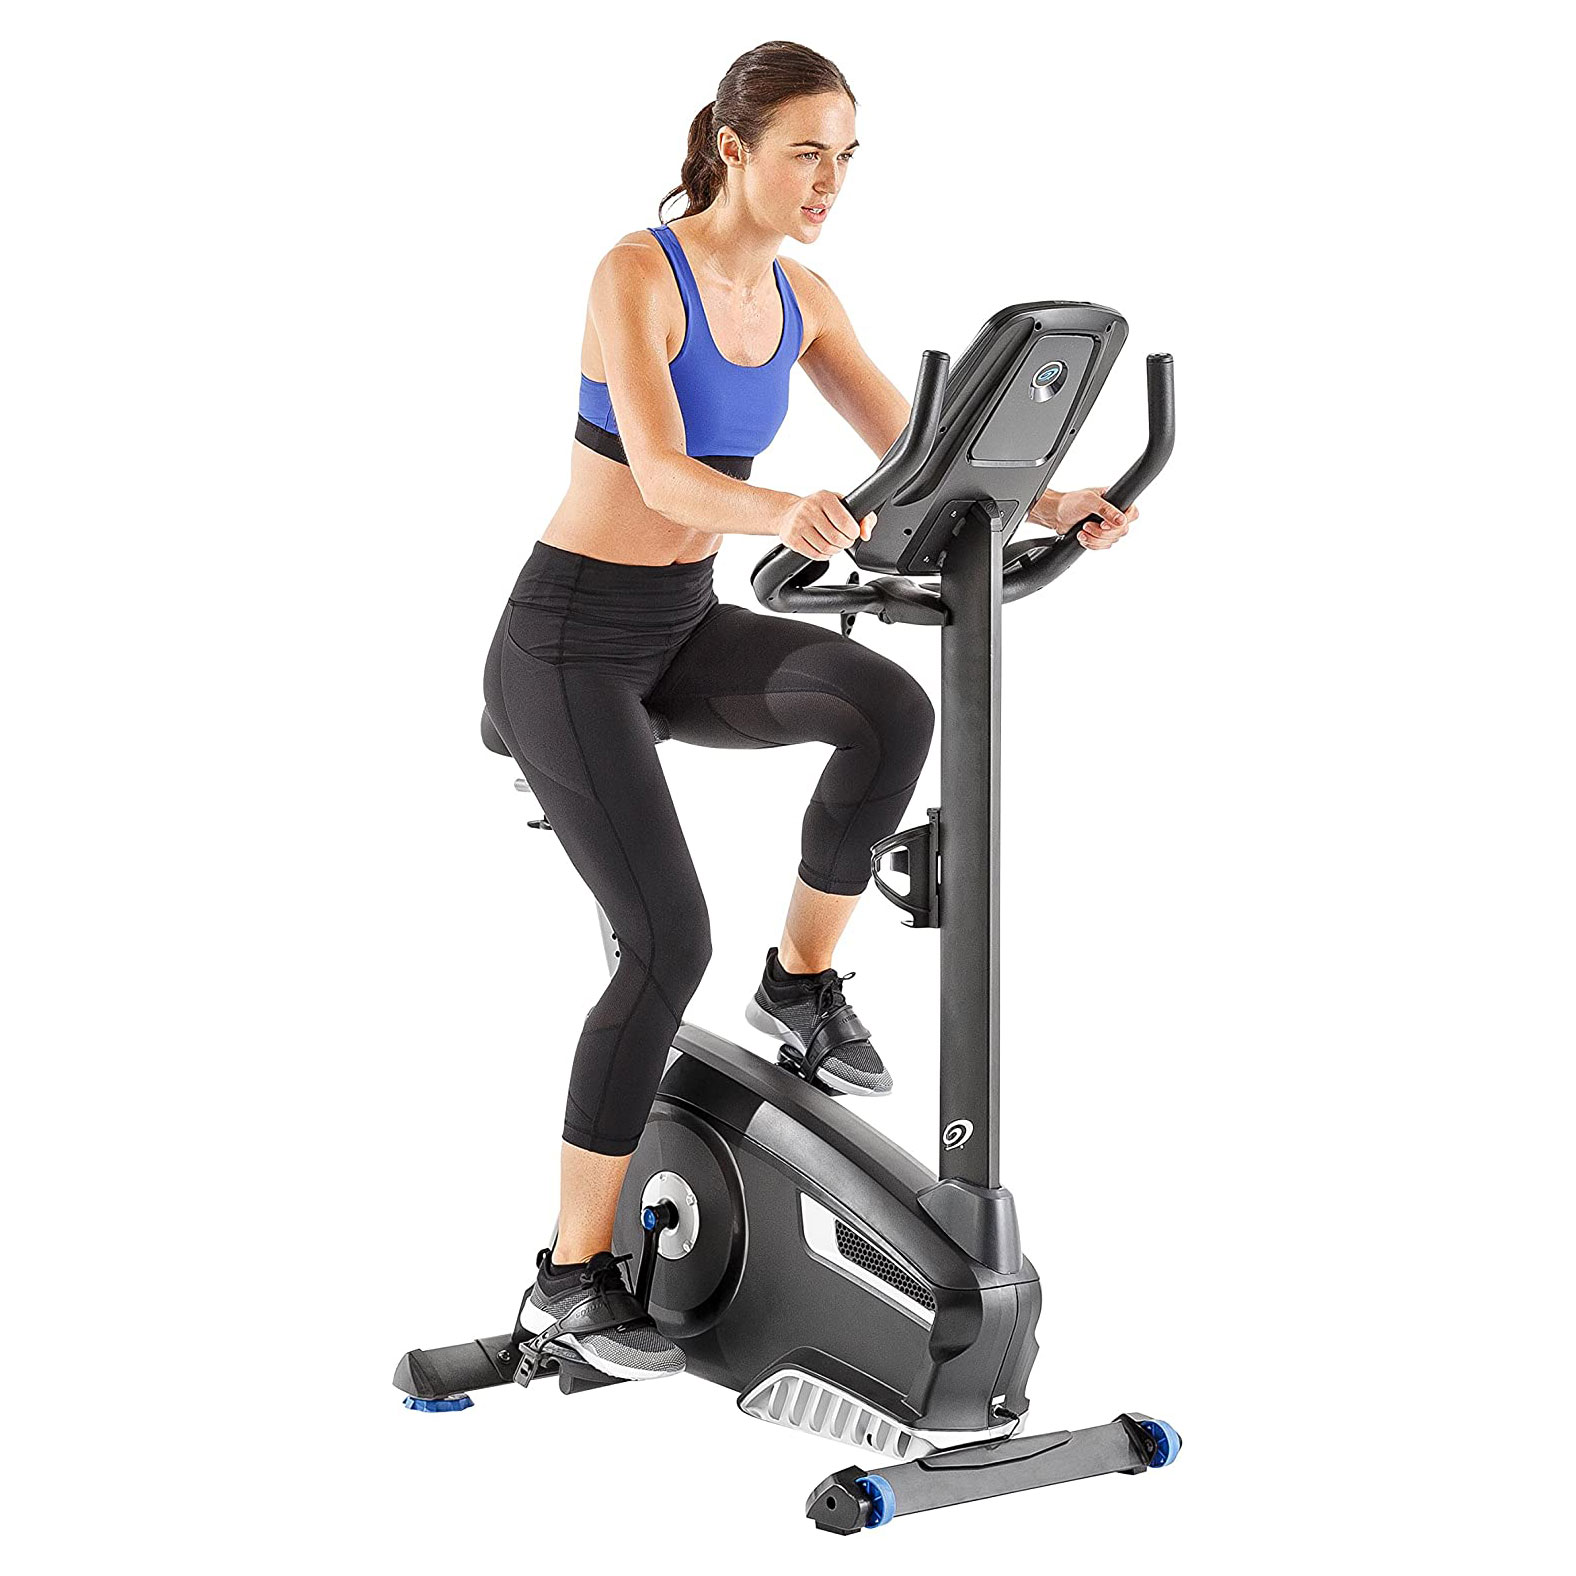 Nautilus U616 Performance Series Upright Home Gym Workout Cardio Exercise Bike - image 1 of 10